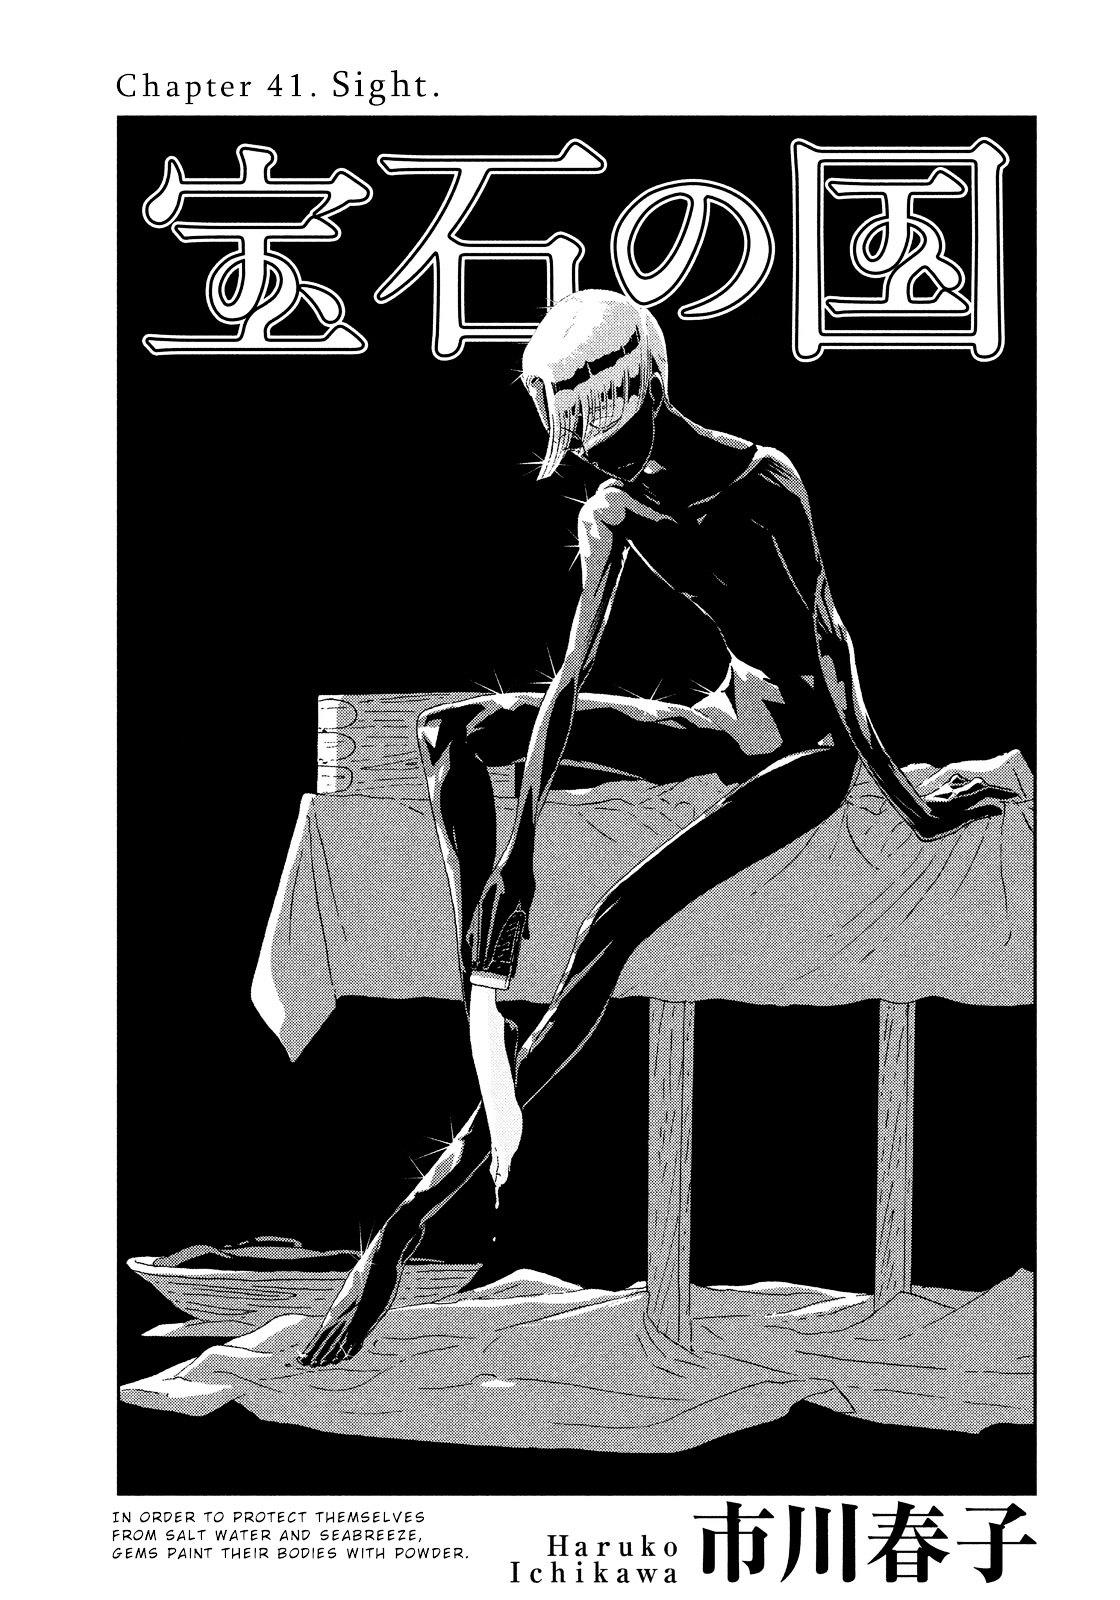 Read Houseki No Kuni Chapter 41 online free | IsekaiScan.art